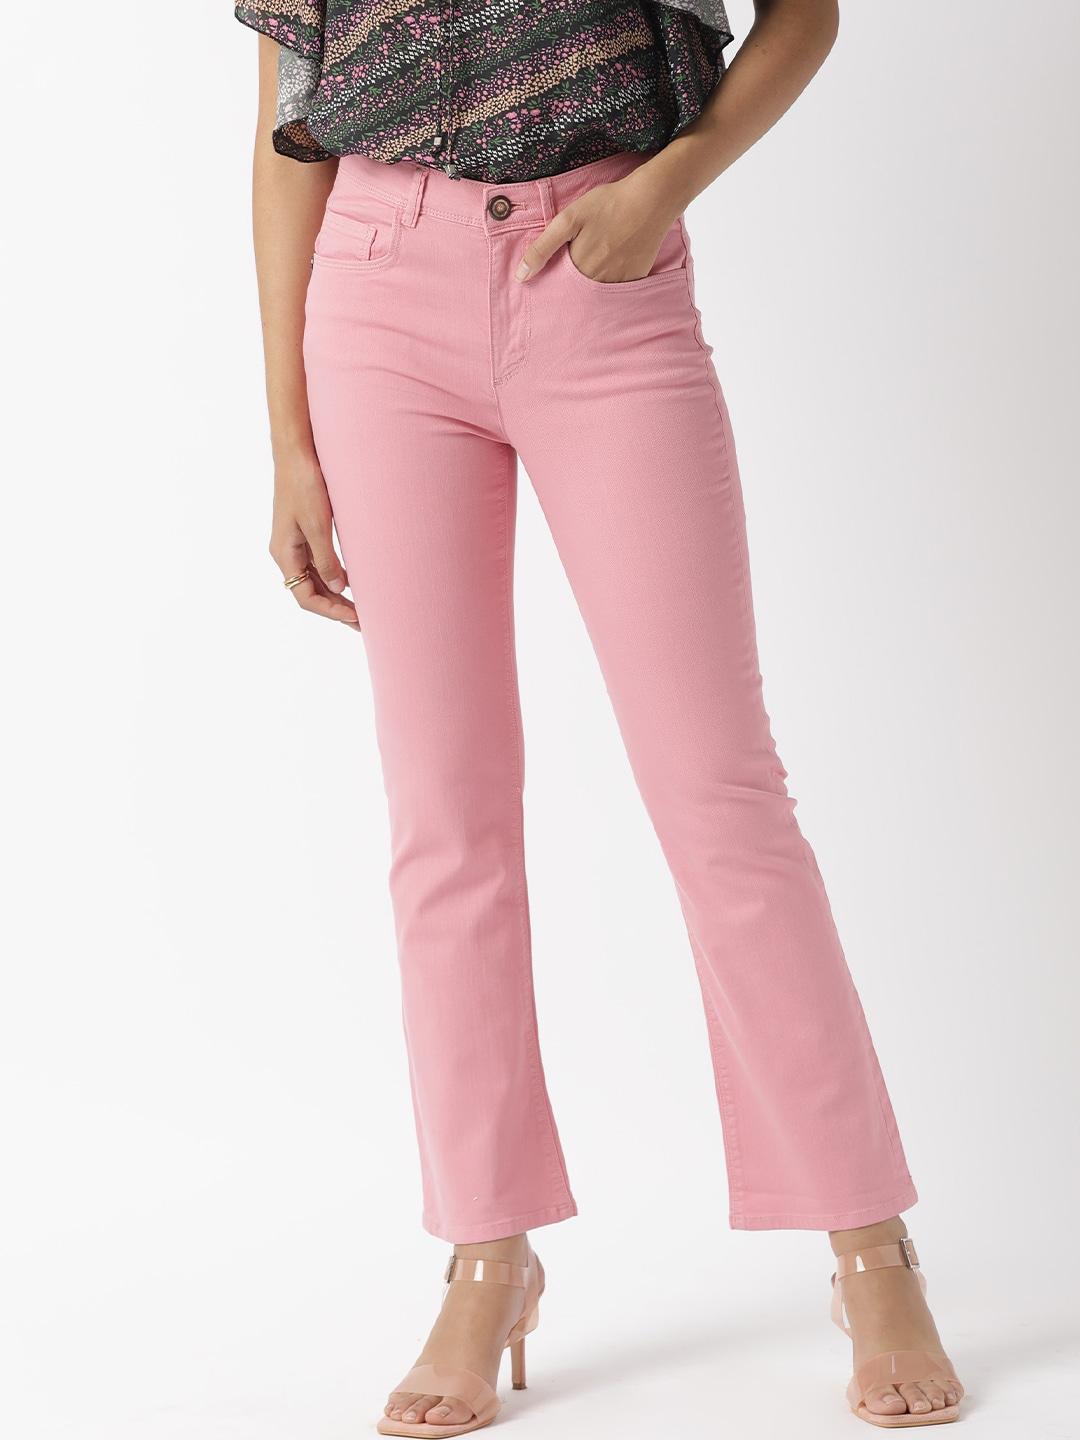 rareism women pink jeans